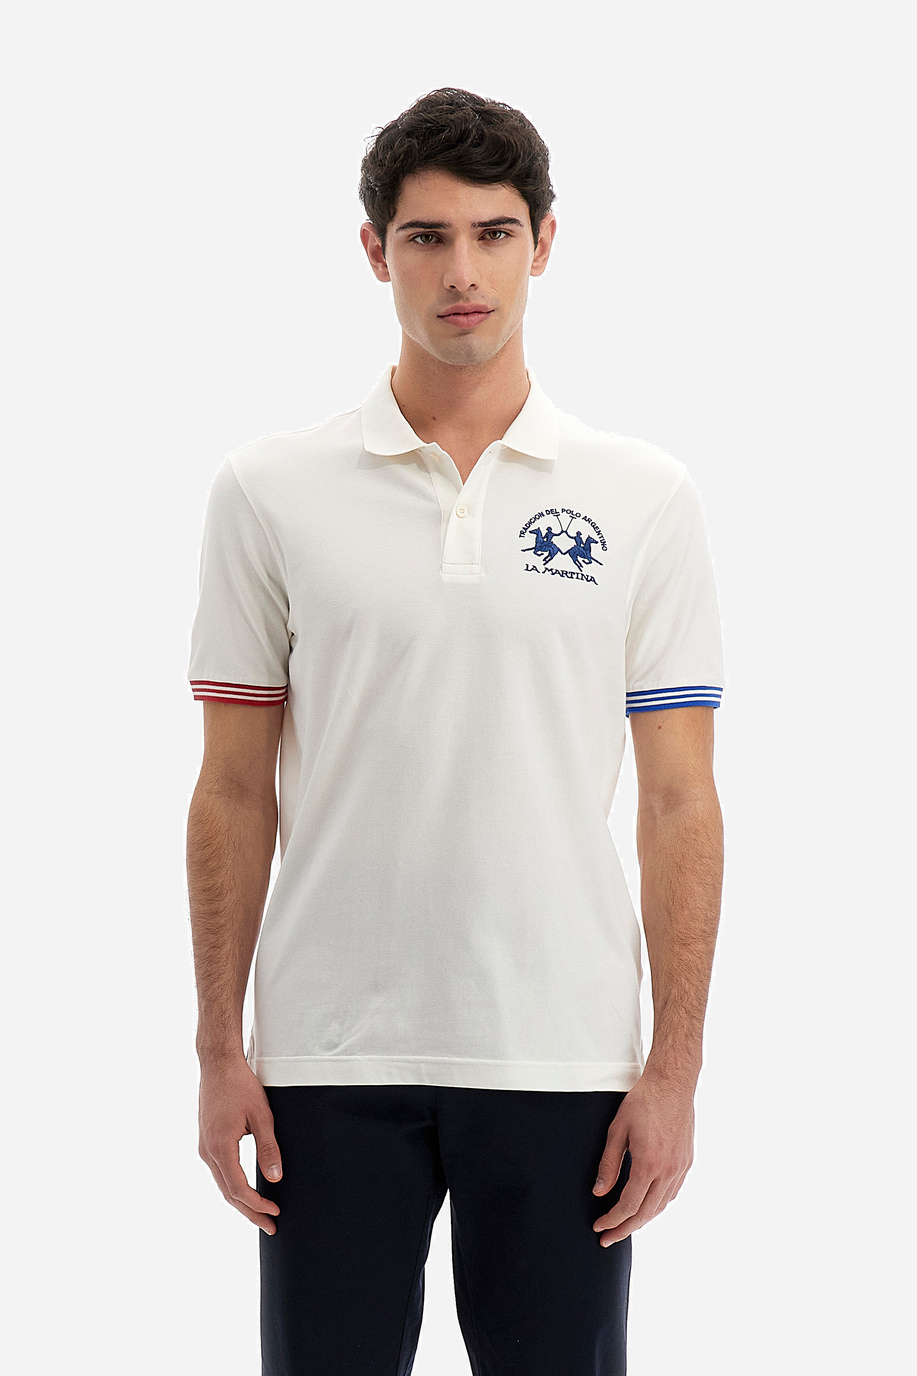 Men's polo shirt in a regular fit - Waddell - Short Sleeve | La Martina - Official Online Shop